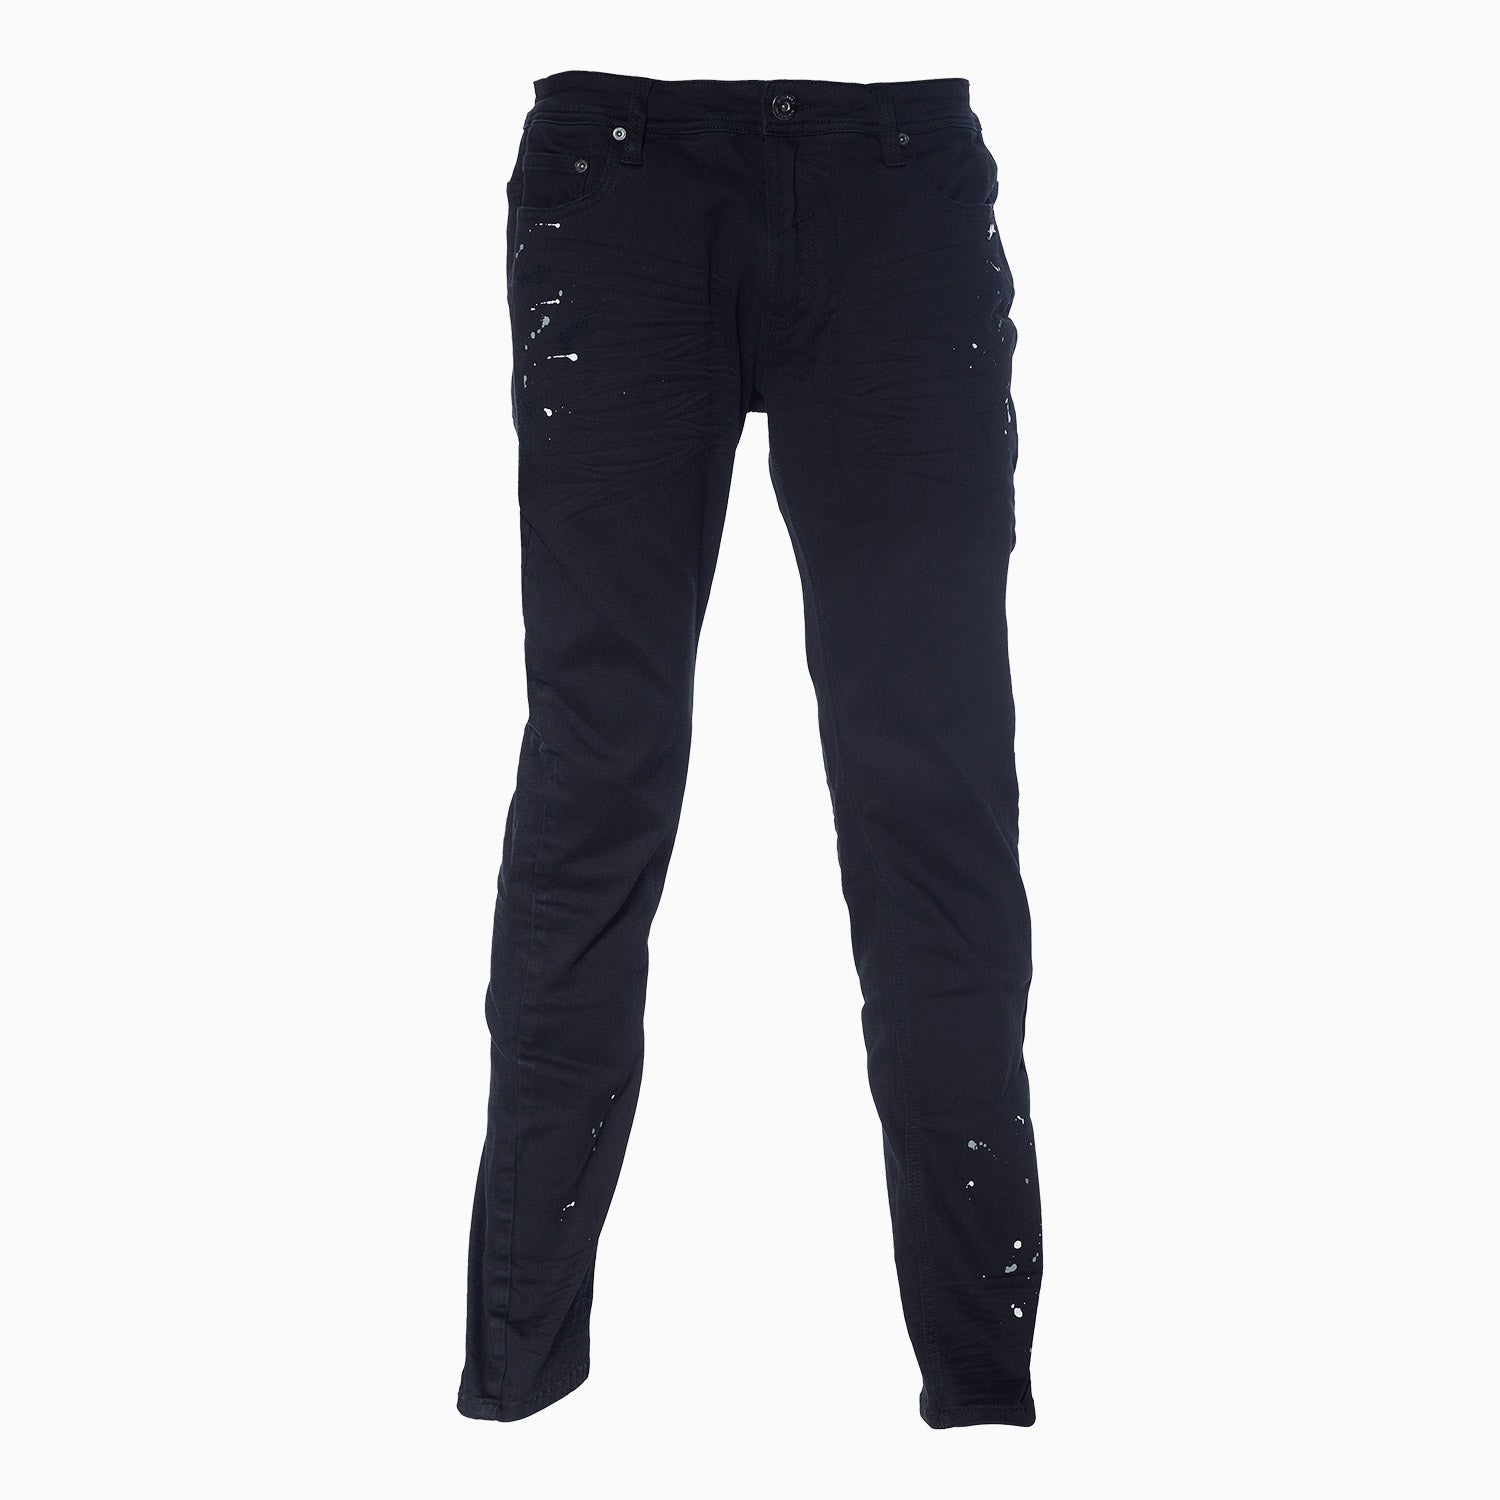 a-tiziano-Men's-Hudson-Twill-Jeans-Pant-41atm1016